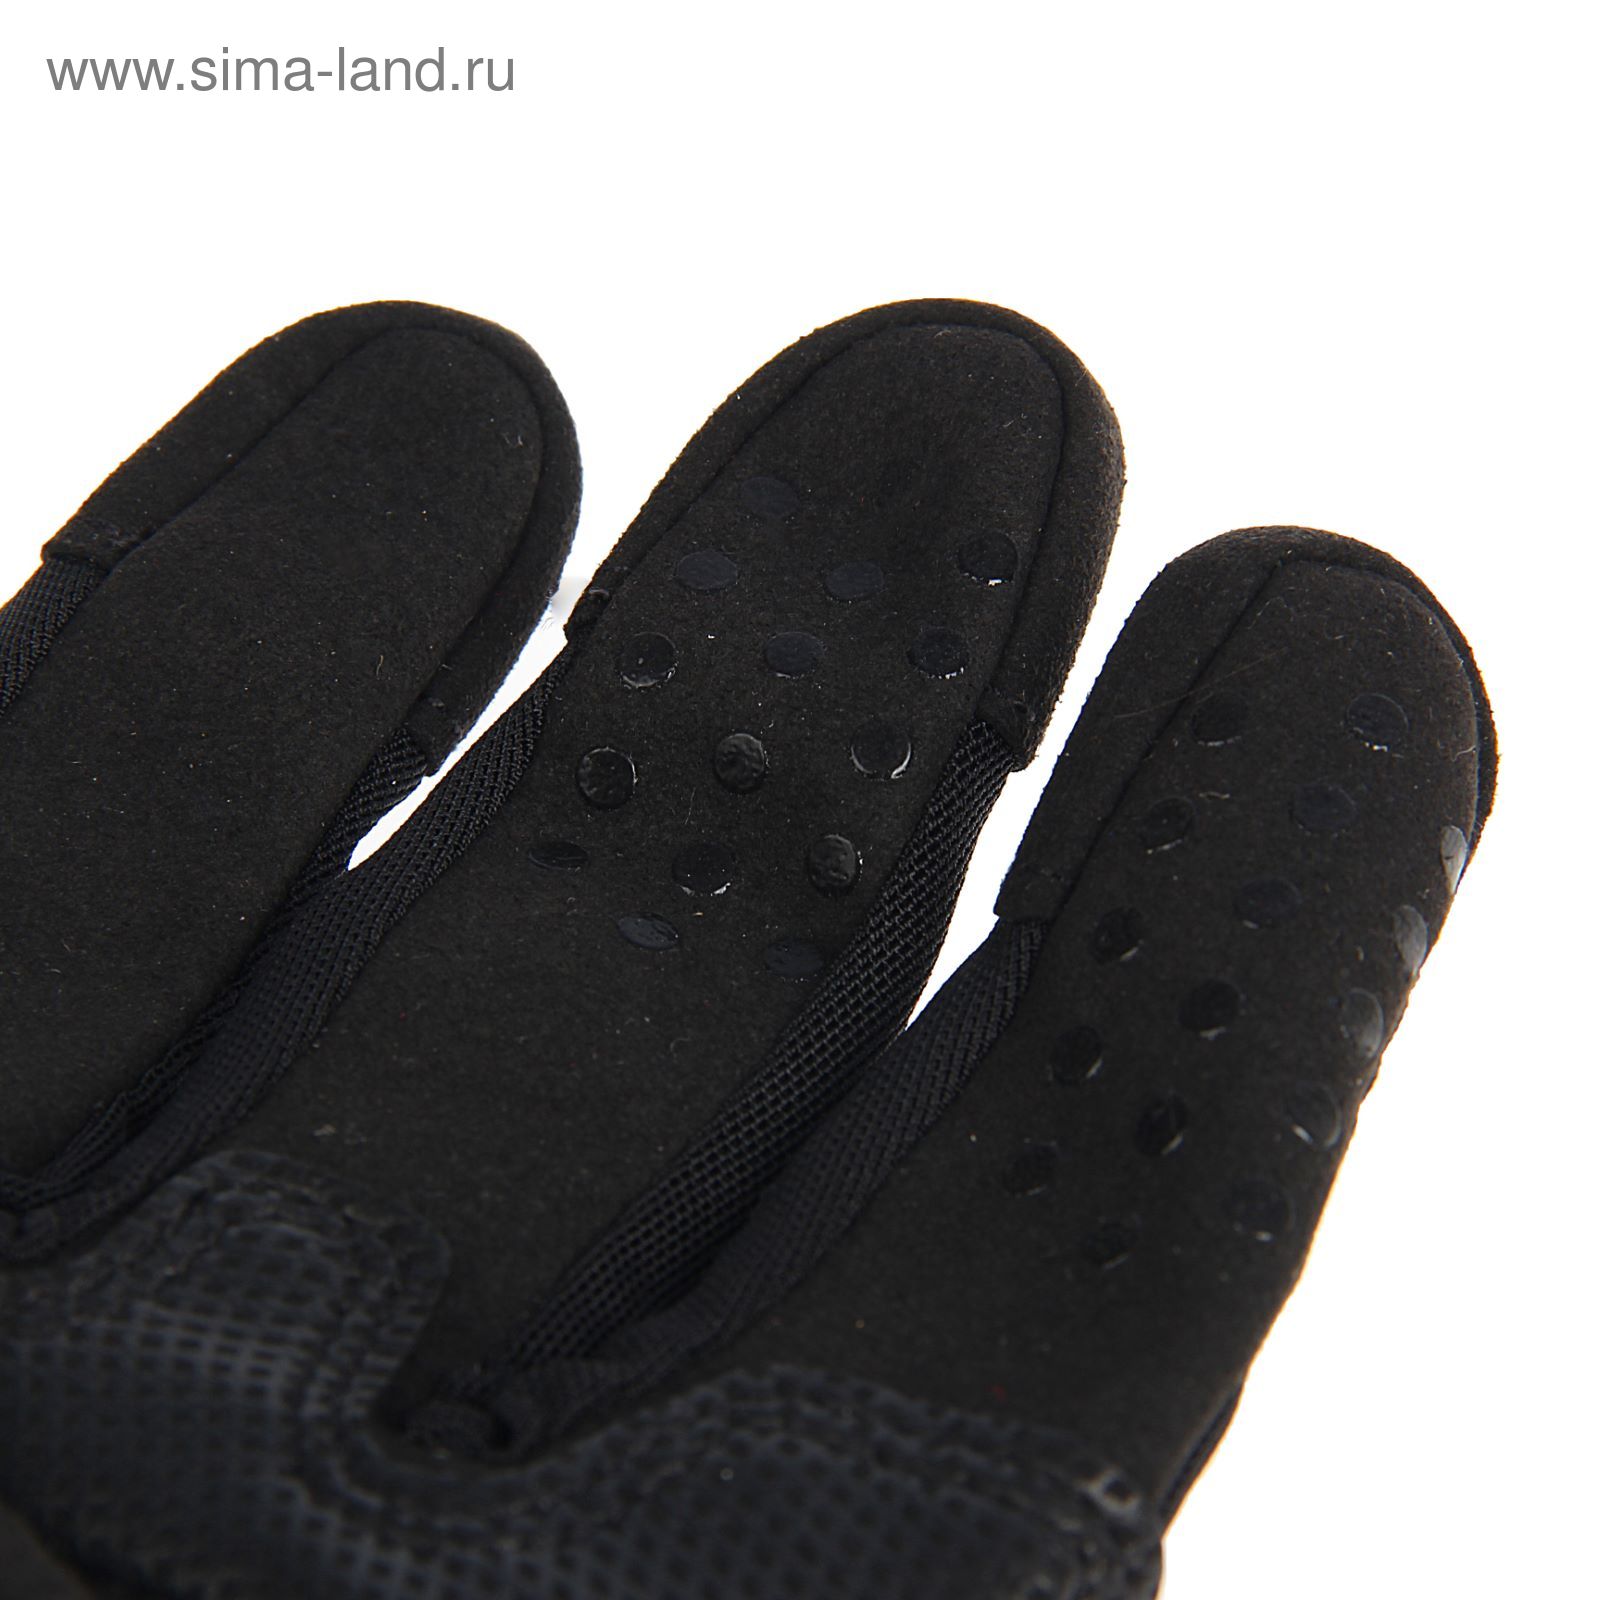 Перчатки Military Half Finder Gloves GL616, размер L, black